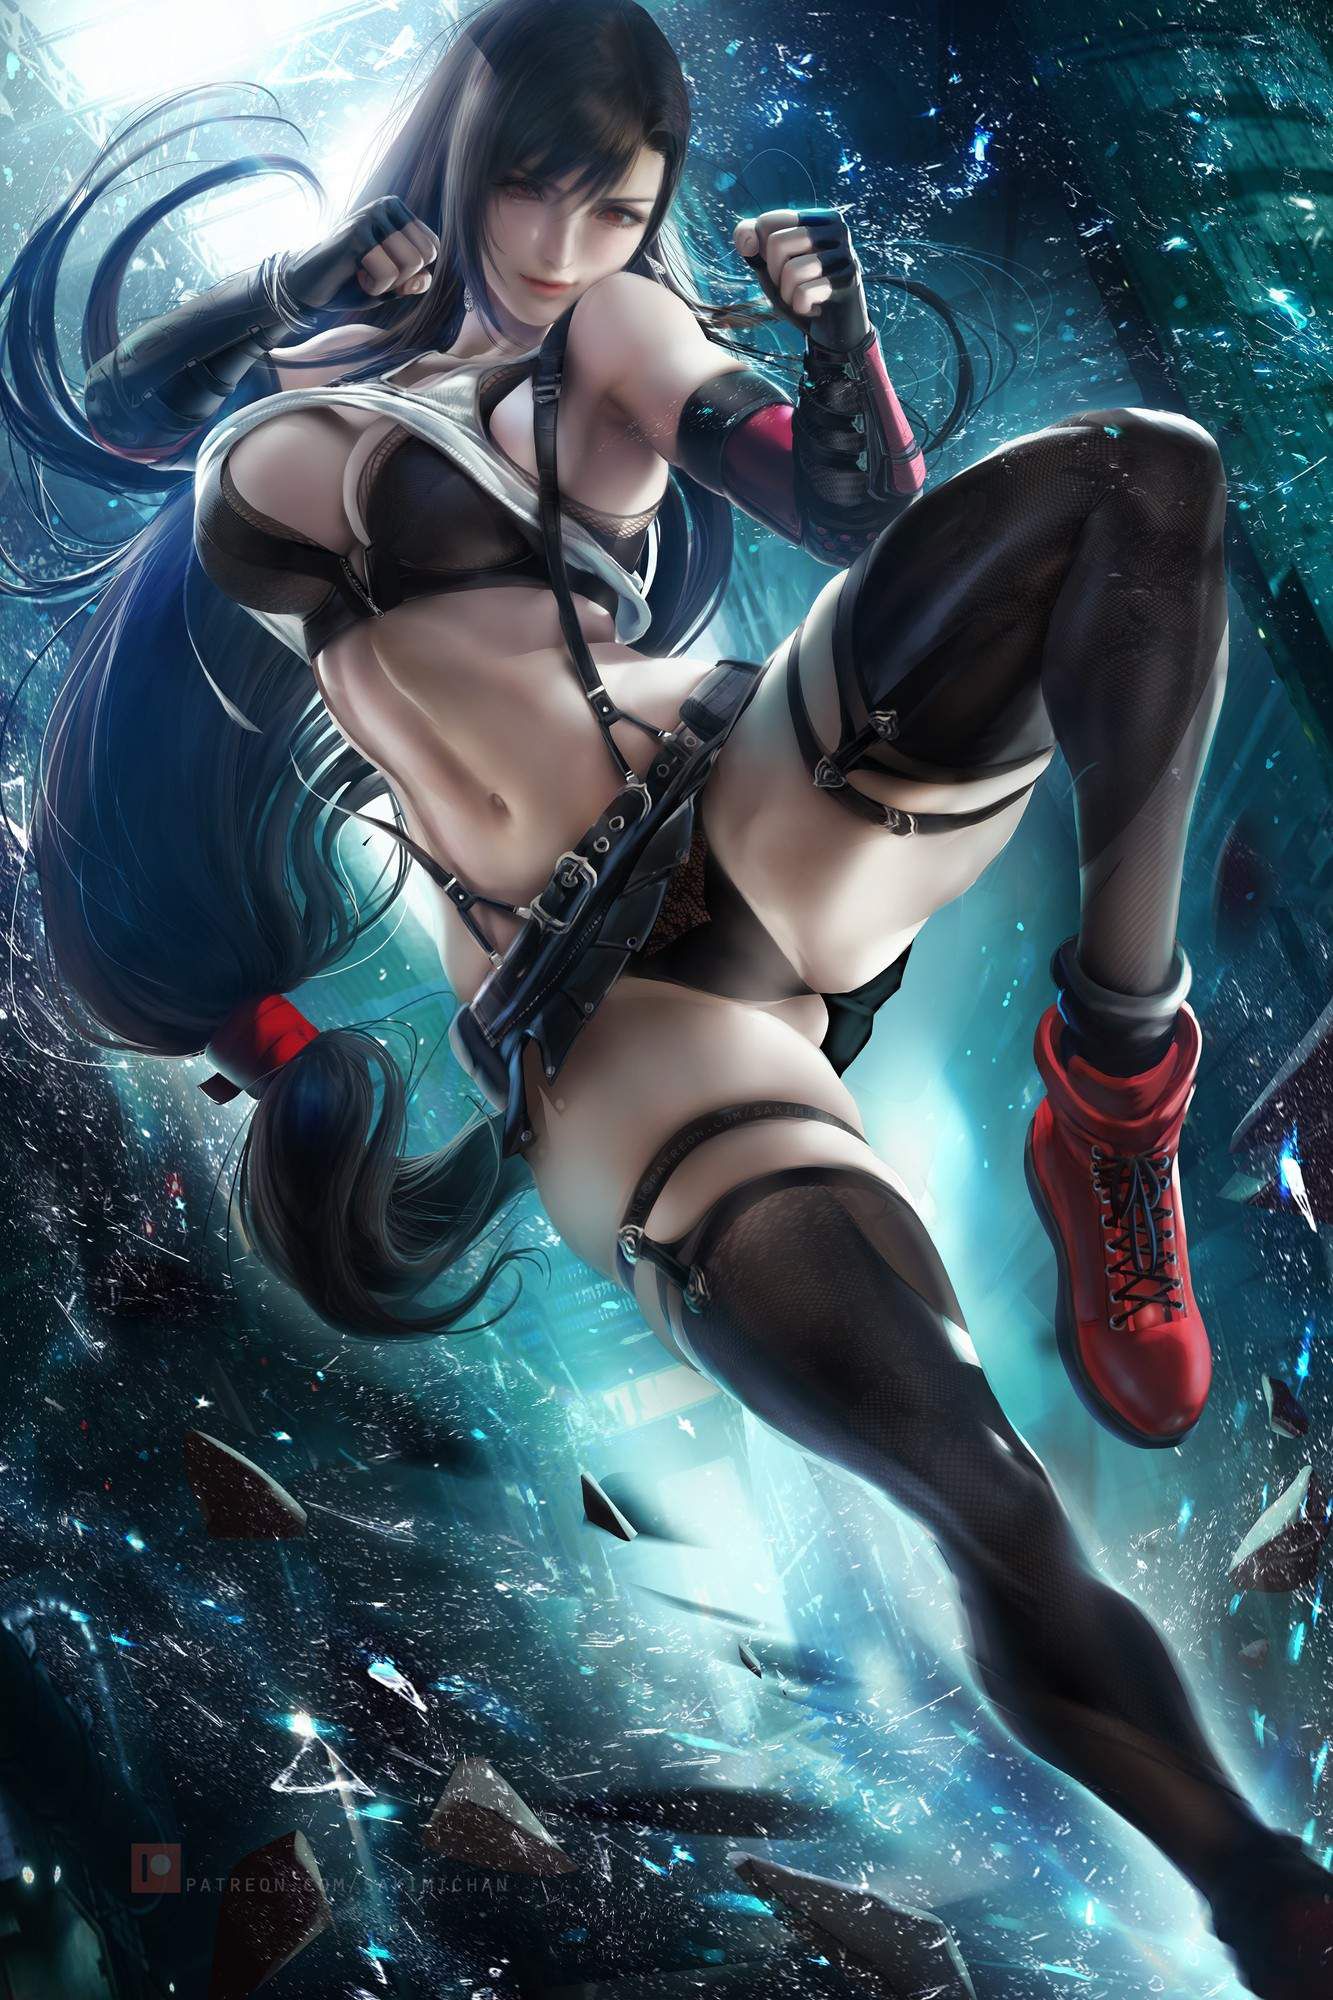 [Final Fantasy] Tifa Lockhart's erotic image supply 12